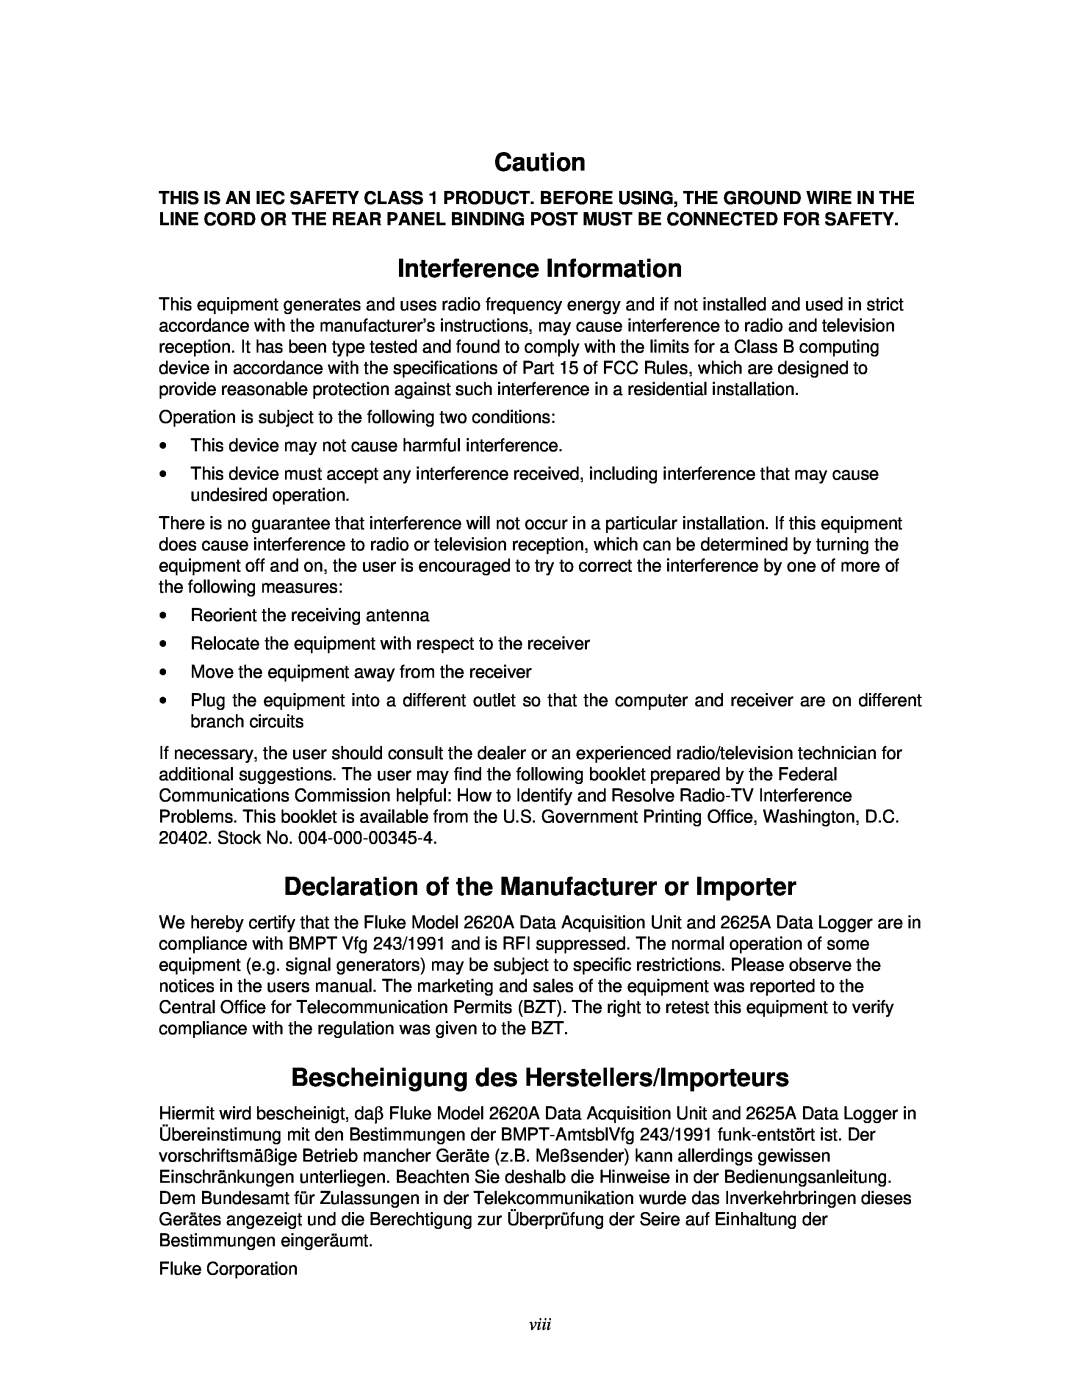 Fluke 2625A, 2620A user manual Interference Information, Declaration of the Manufacturer or Importer, viii 